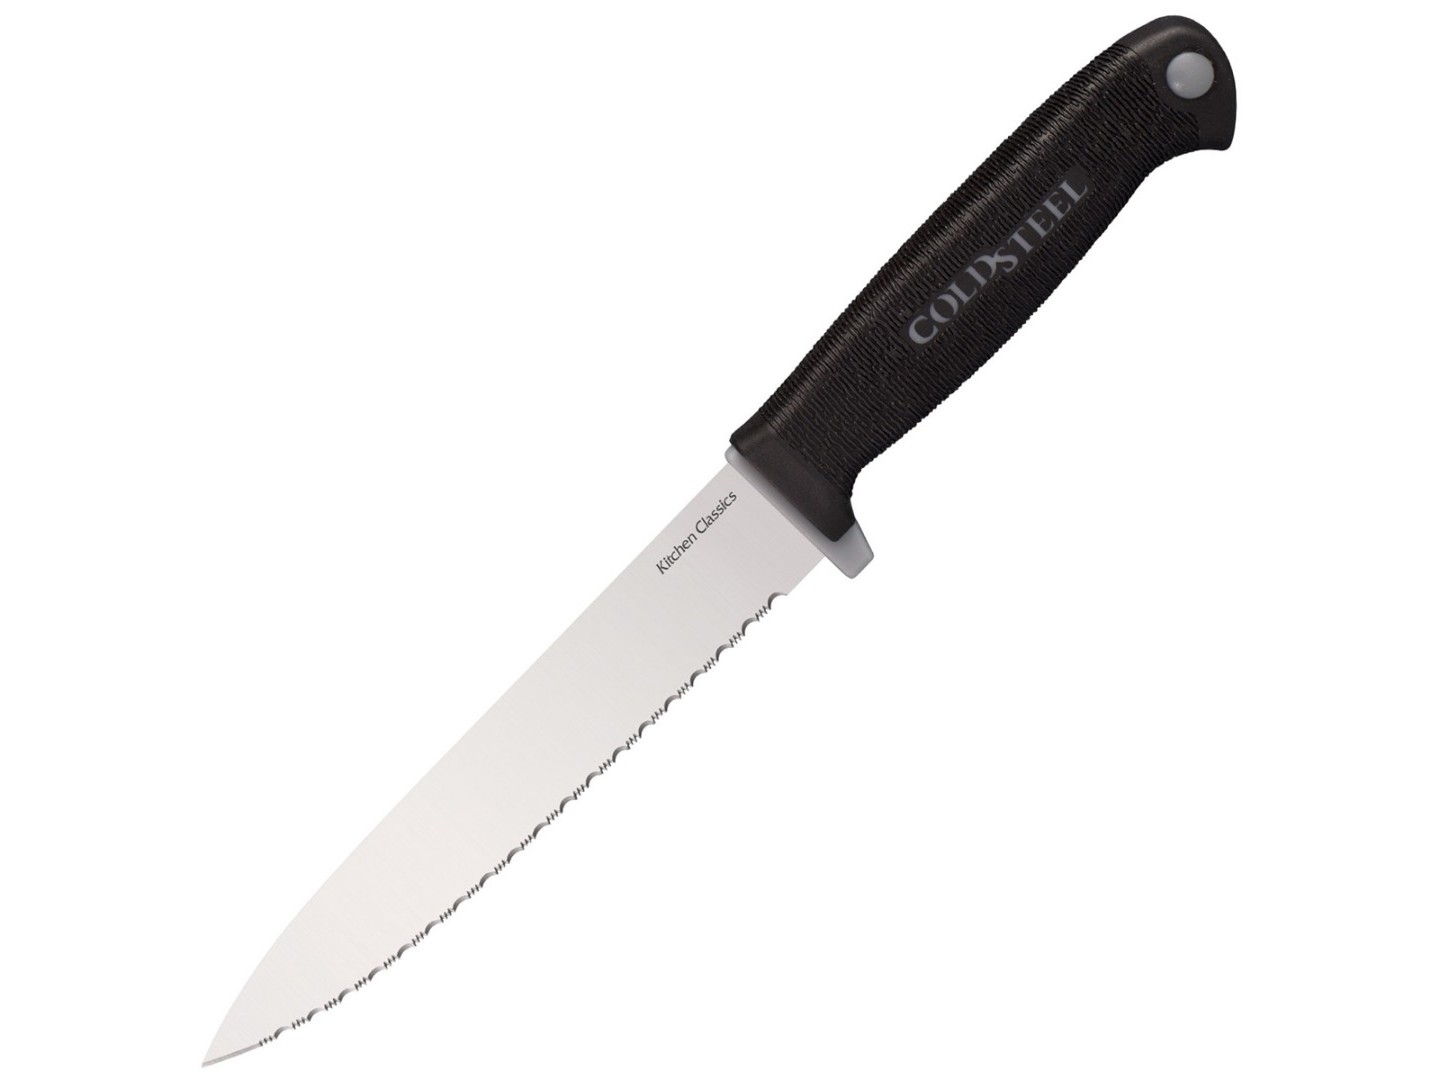 Кухонный нож с серрейтором Cold Steel Utility Knife (Kitchen Classics) 59KSUZ сталь 1.4116 рукоять Kray-Ex